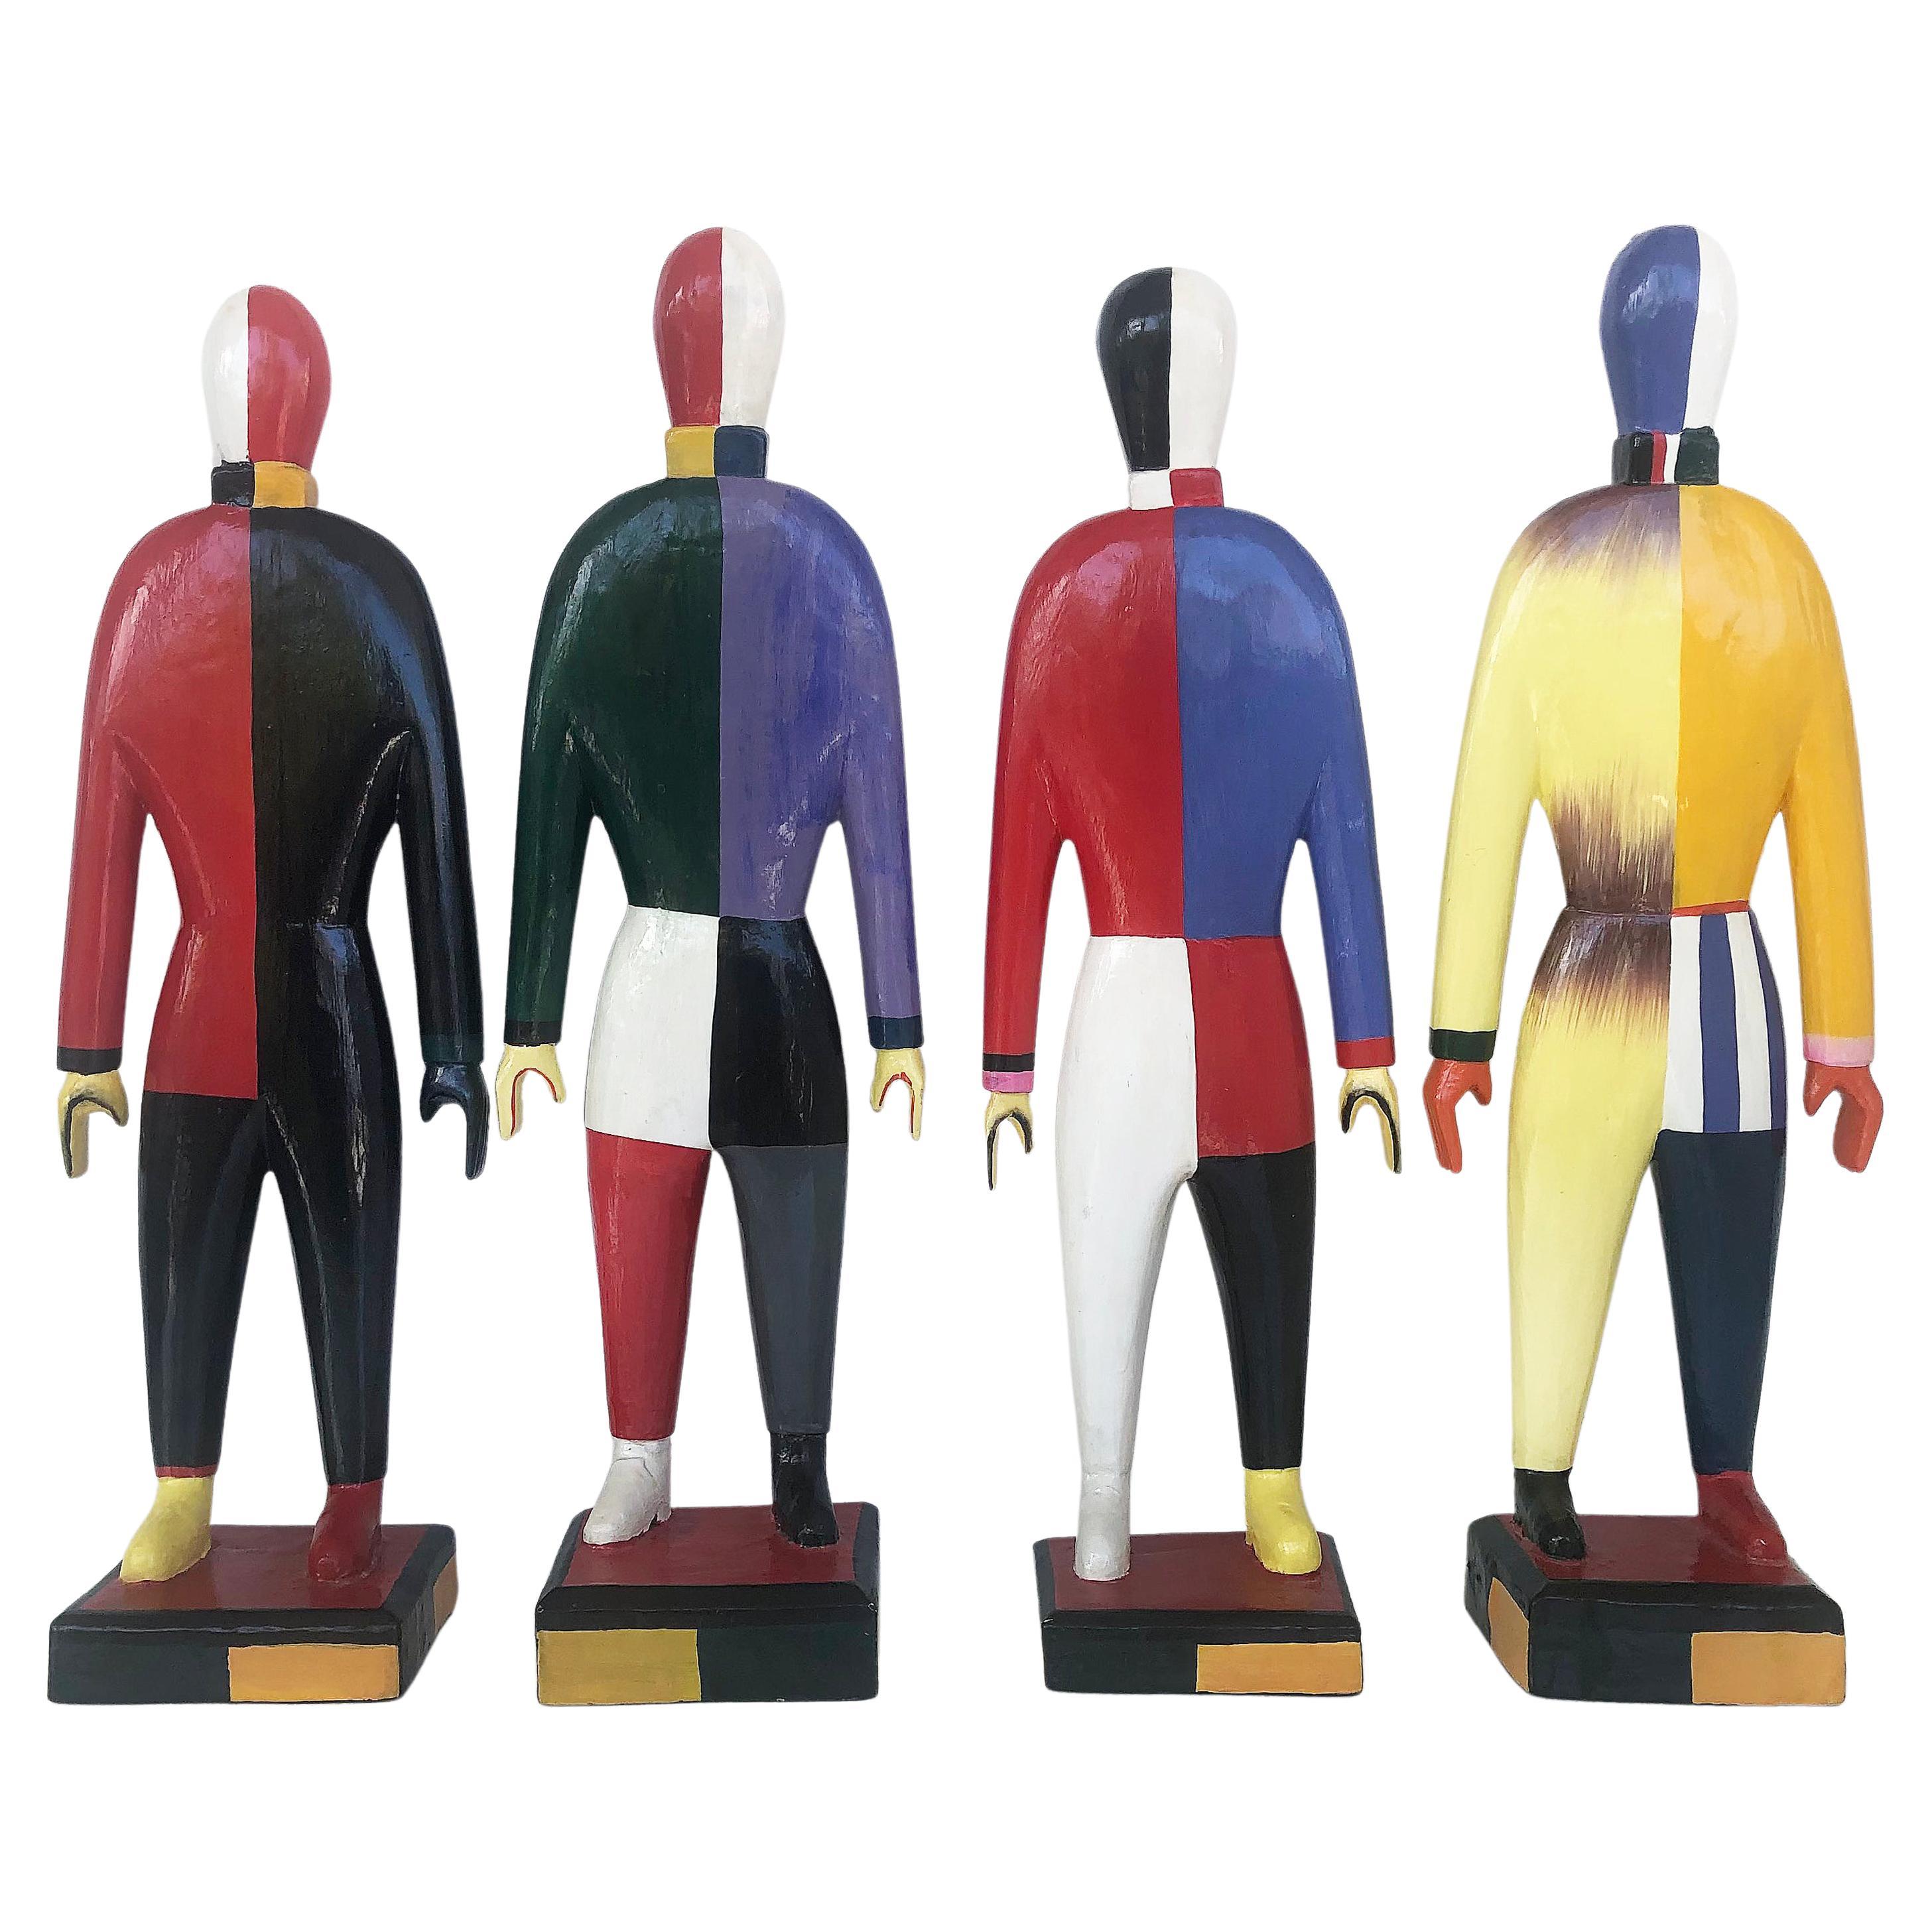 Kazimir Malevich Avant-Garde "Sportsmen" Sculptures, Original Group of 4